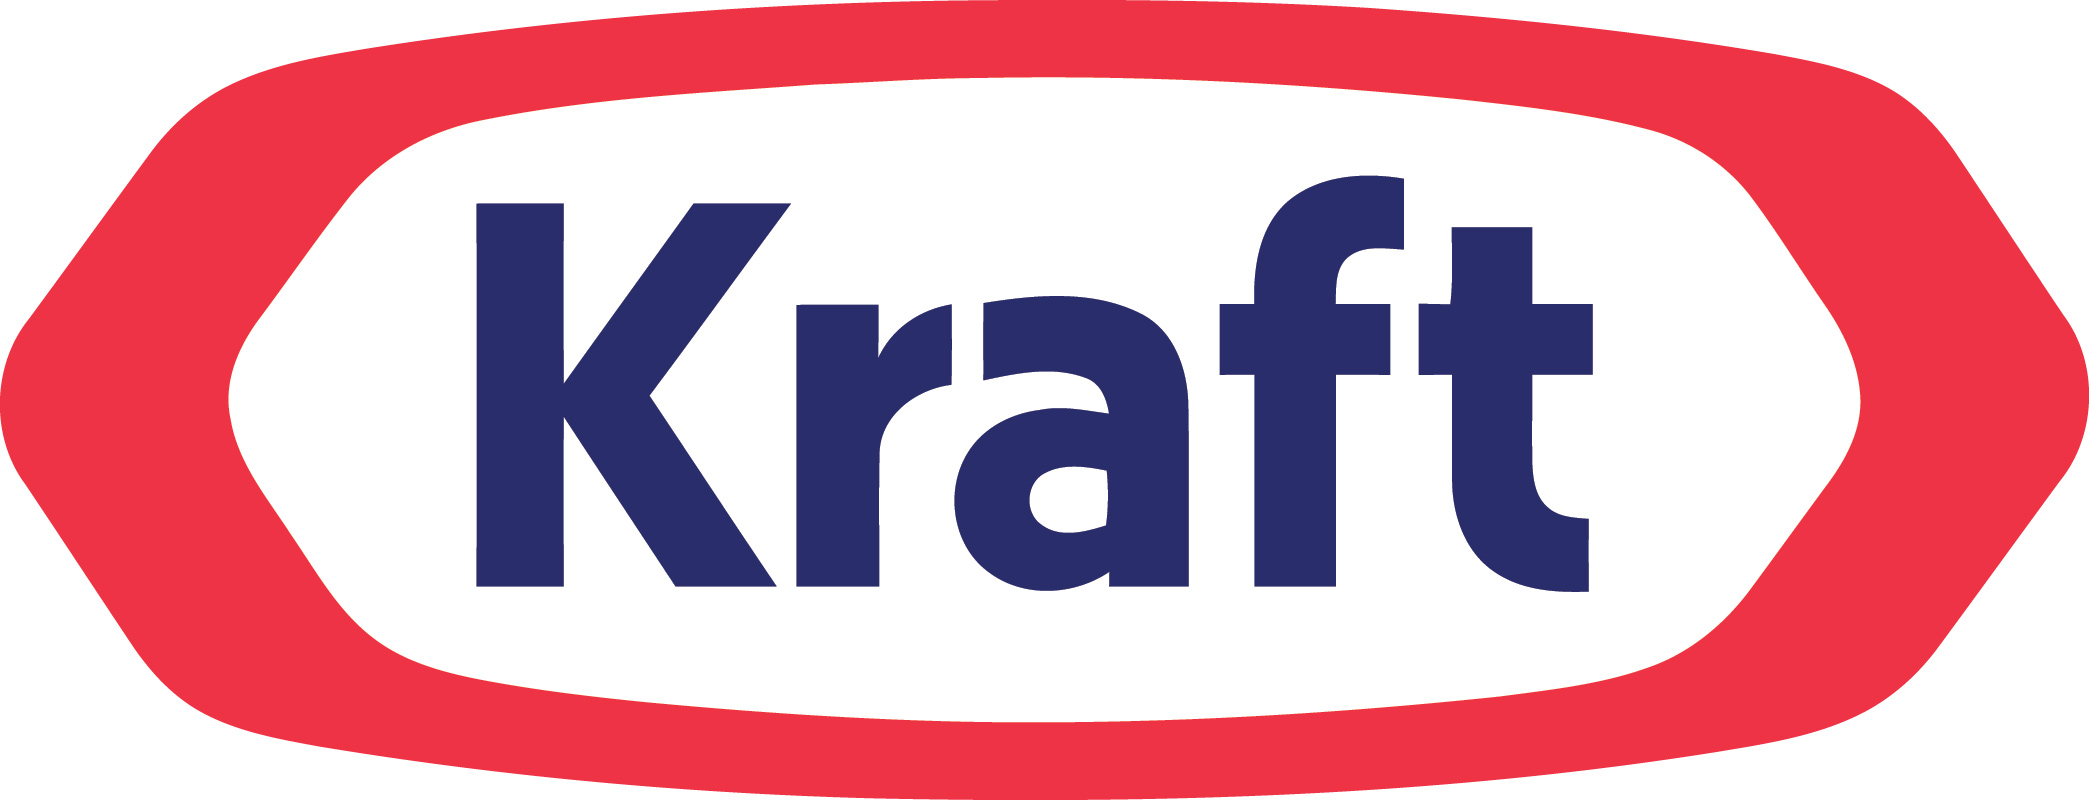 Kraft Foods Logo